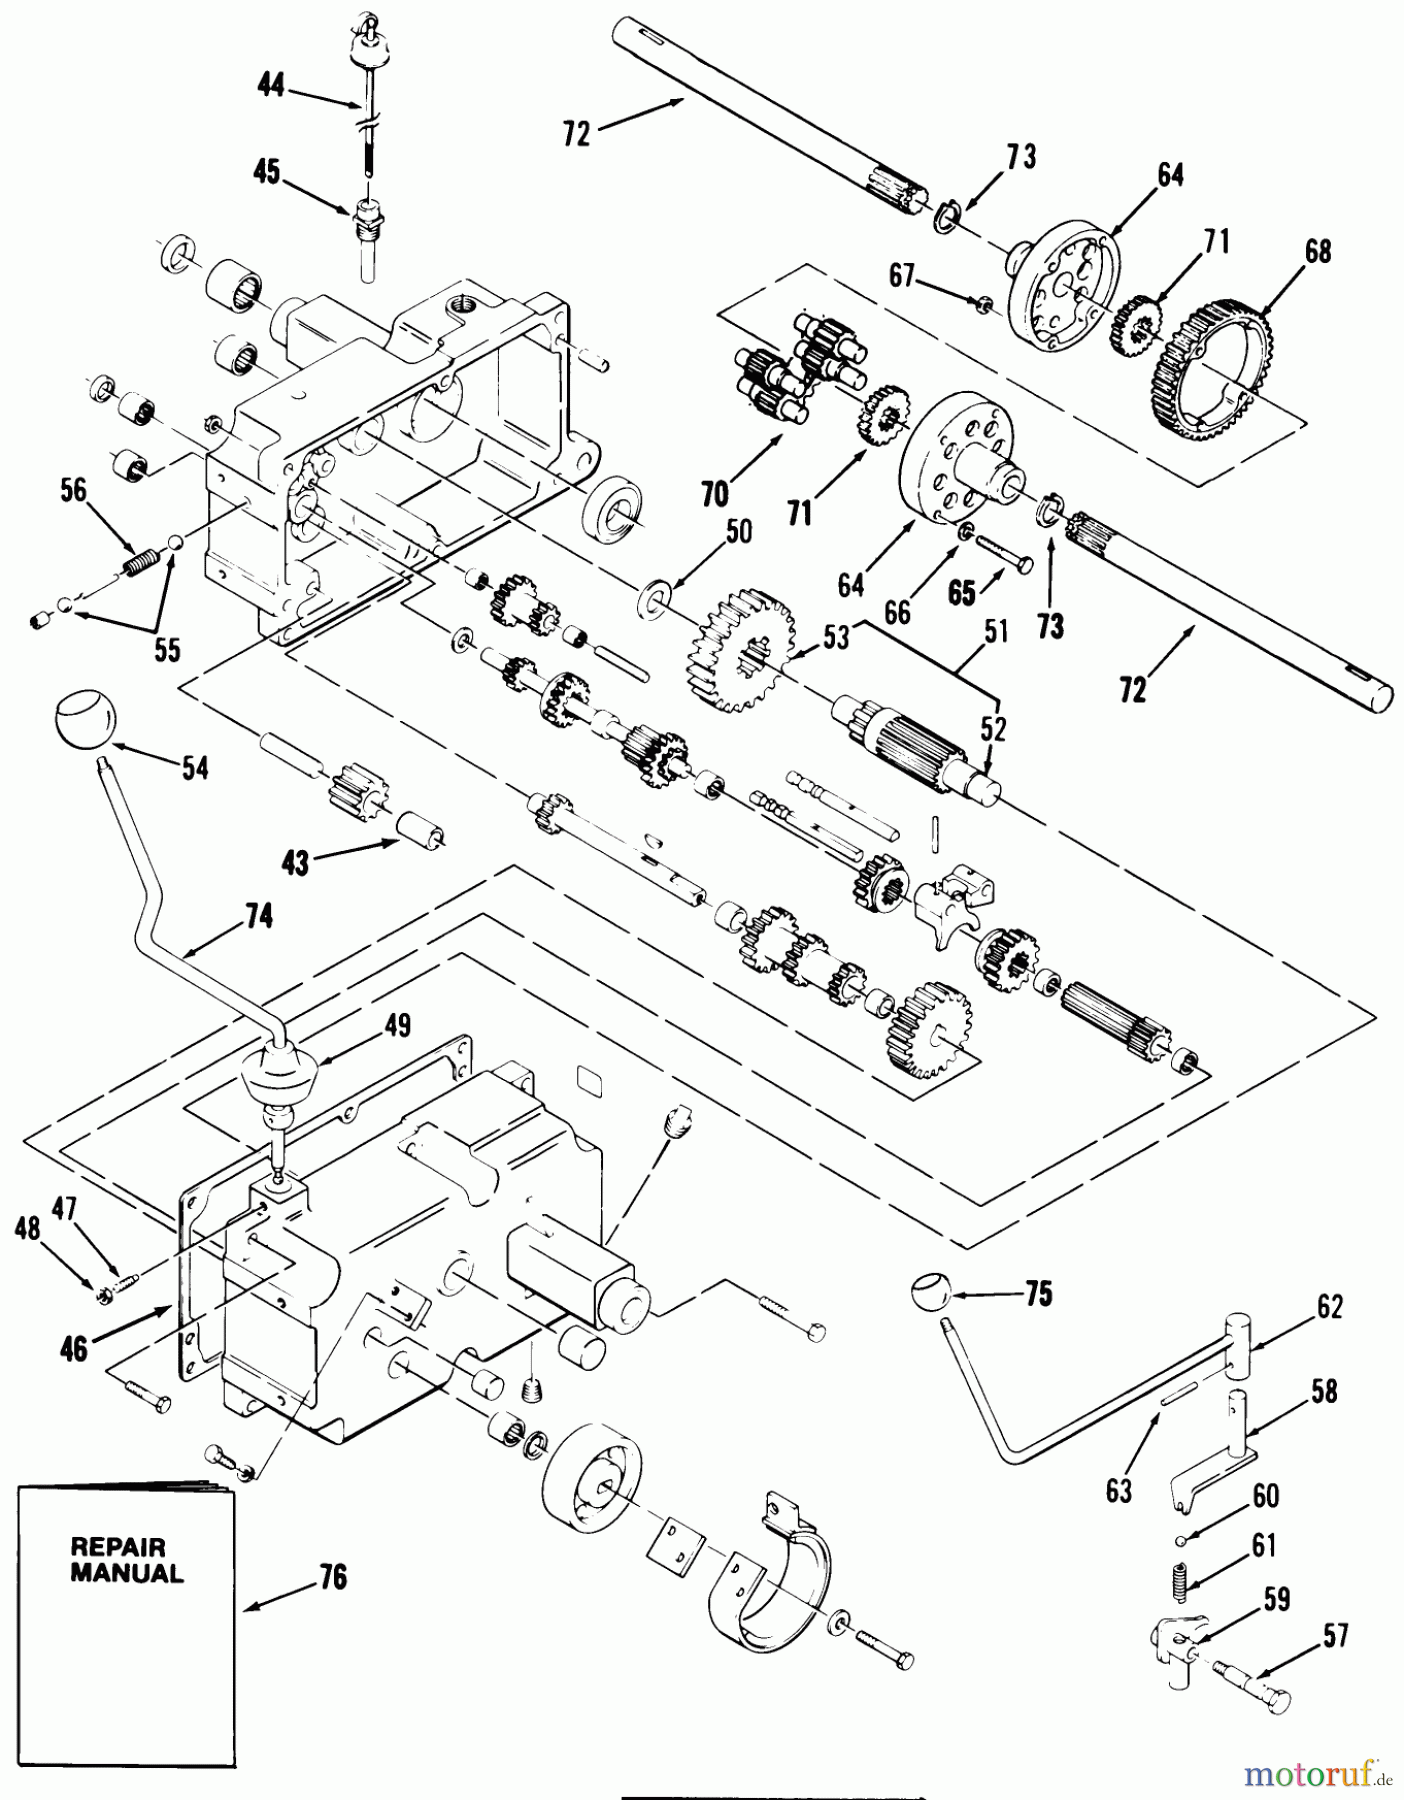  Toro Neu Mowers, Lawn & Garden Tractor Seite 1 31-18KE01 (418-A) - Toro 418-A Garden Tractor, 1987 MECHANICAL TRANSMISSION-8-SPEED #2